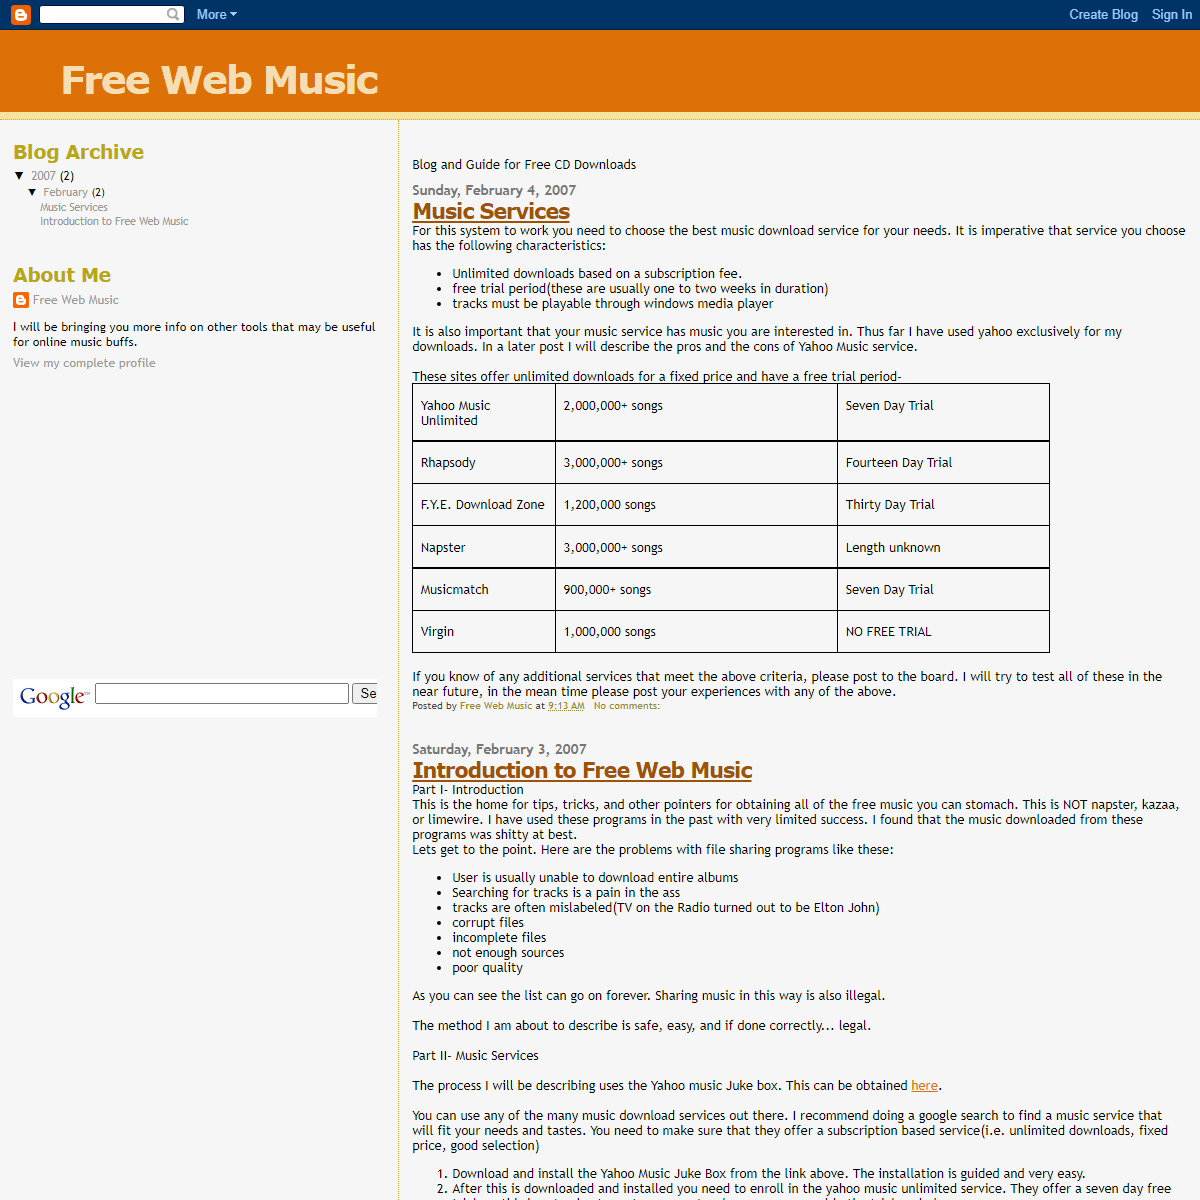 A complete backup of https://freewebmusic.blogspot.com/